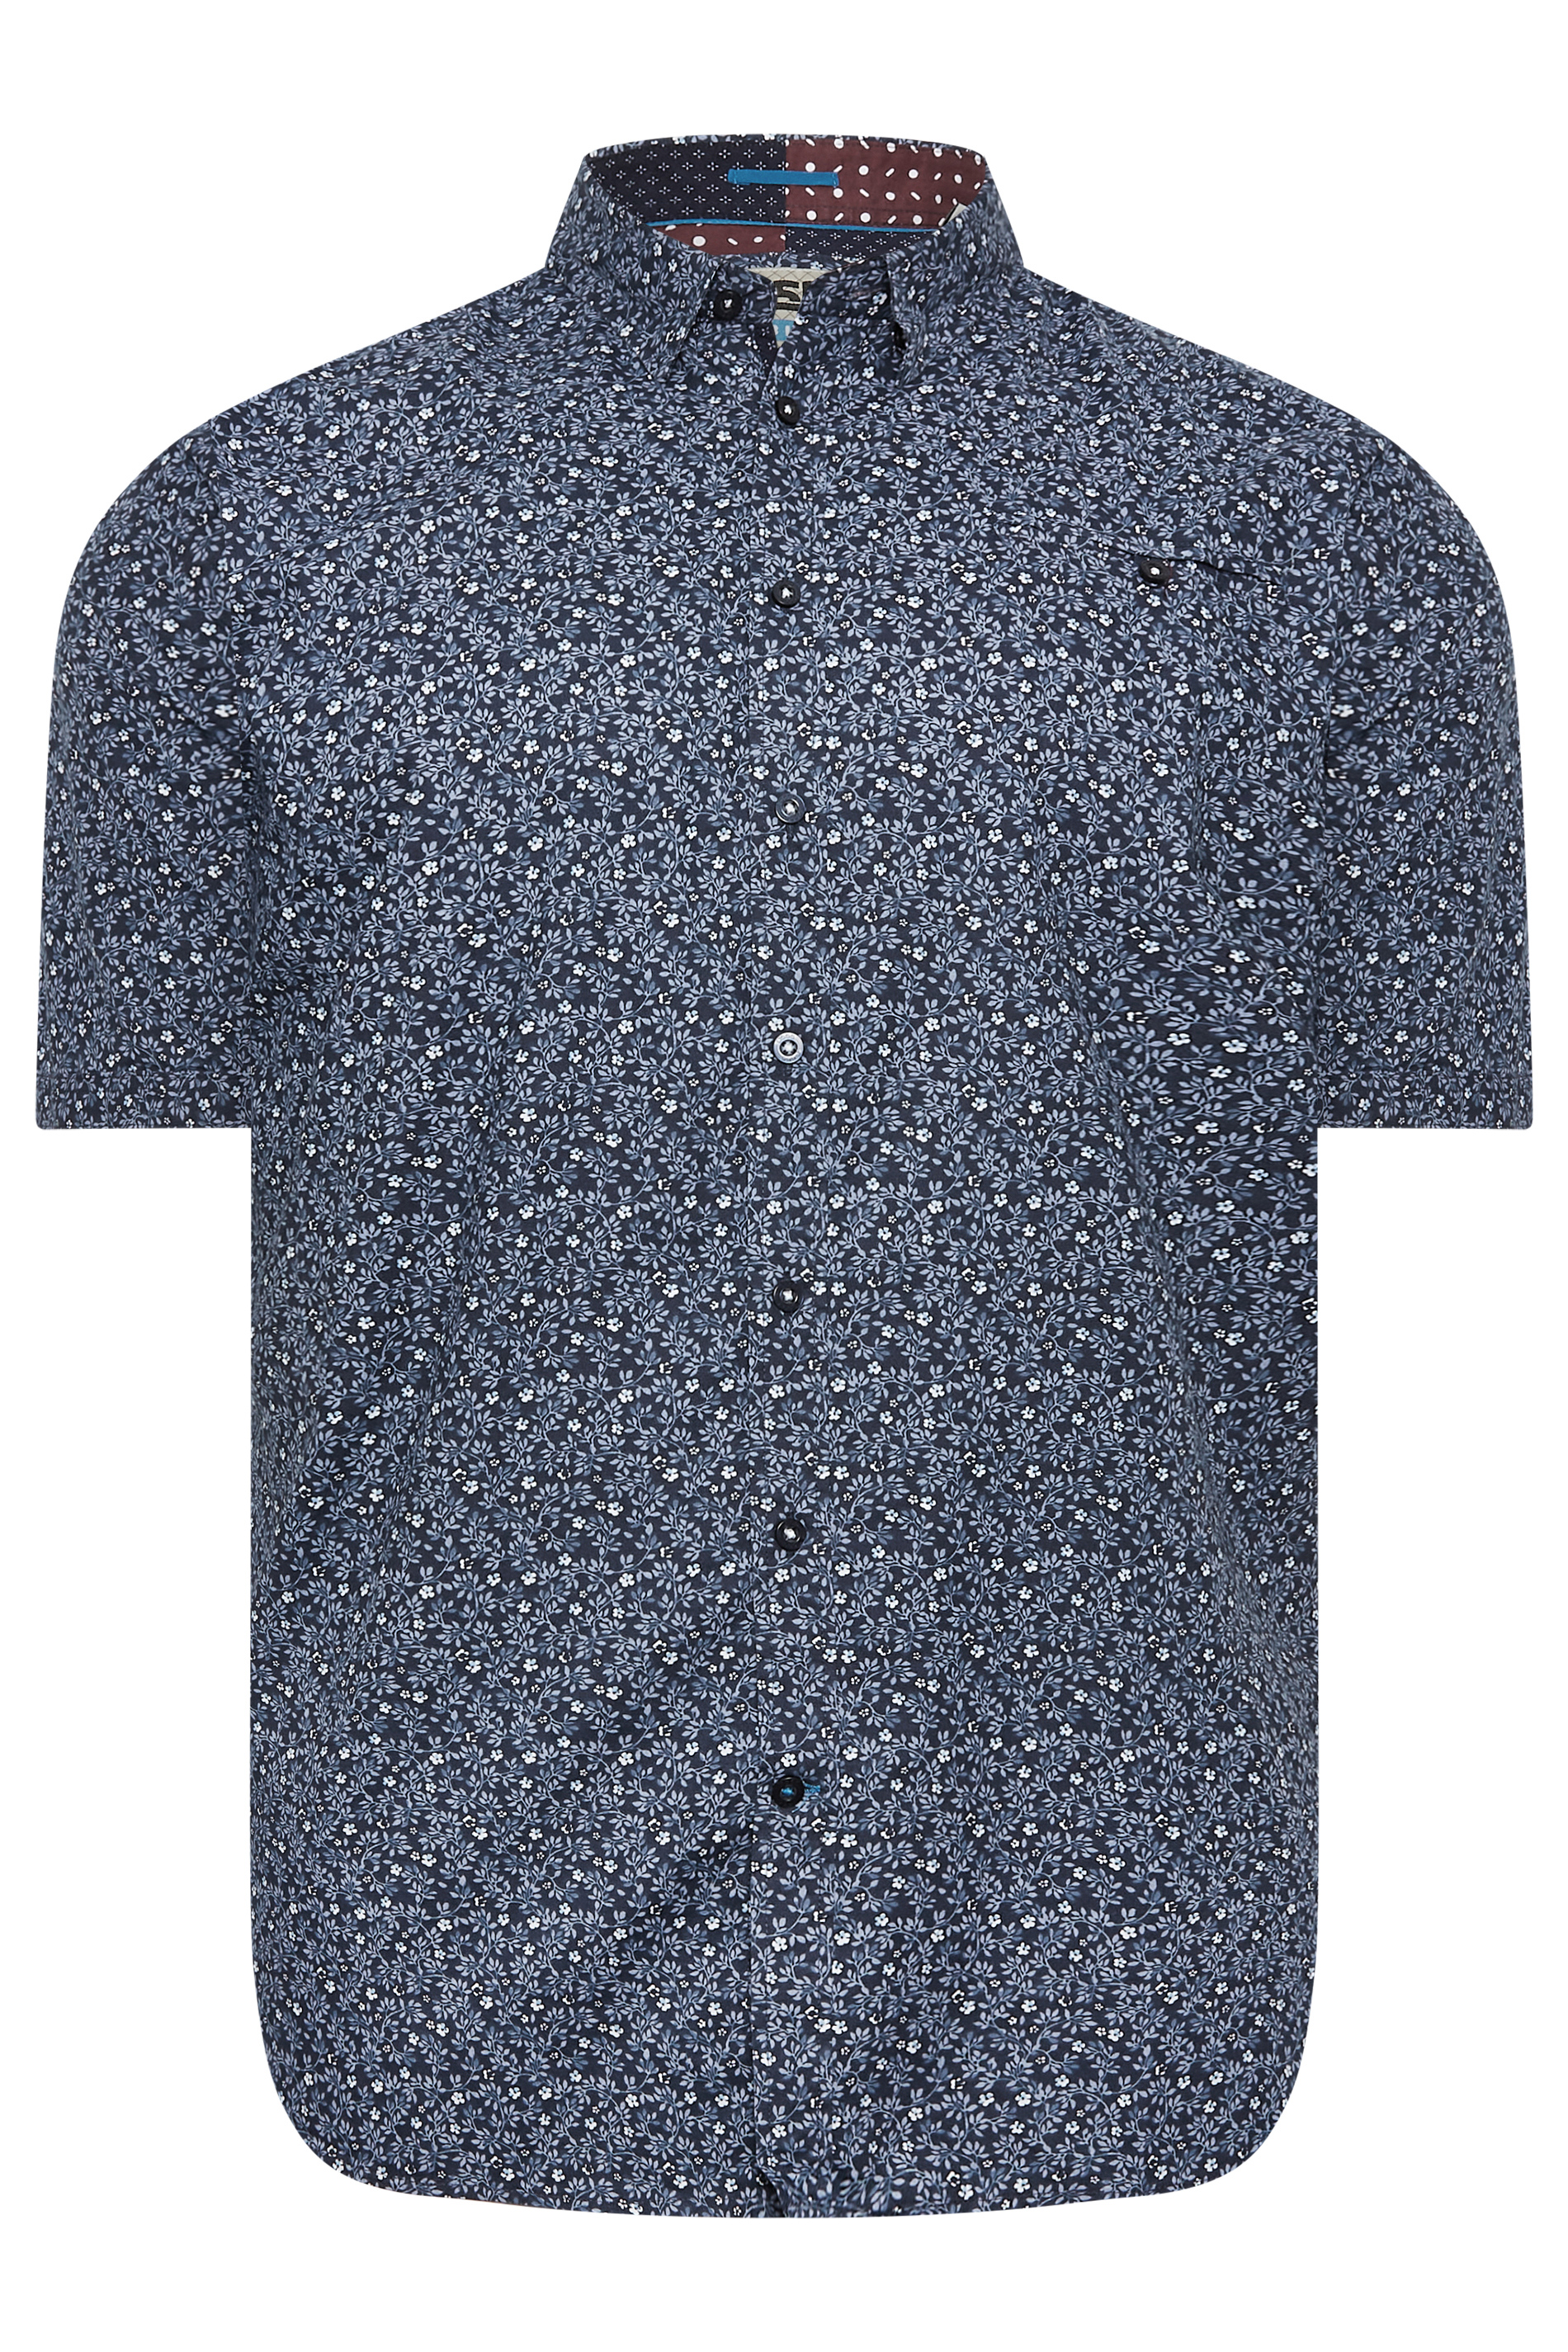 D555 Big & Tall Navy Blue Floral Button Shirt | BadRhino 3